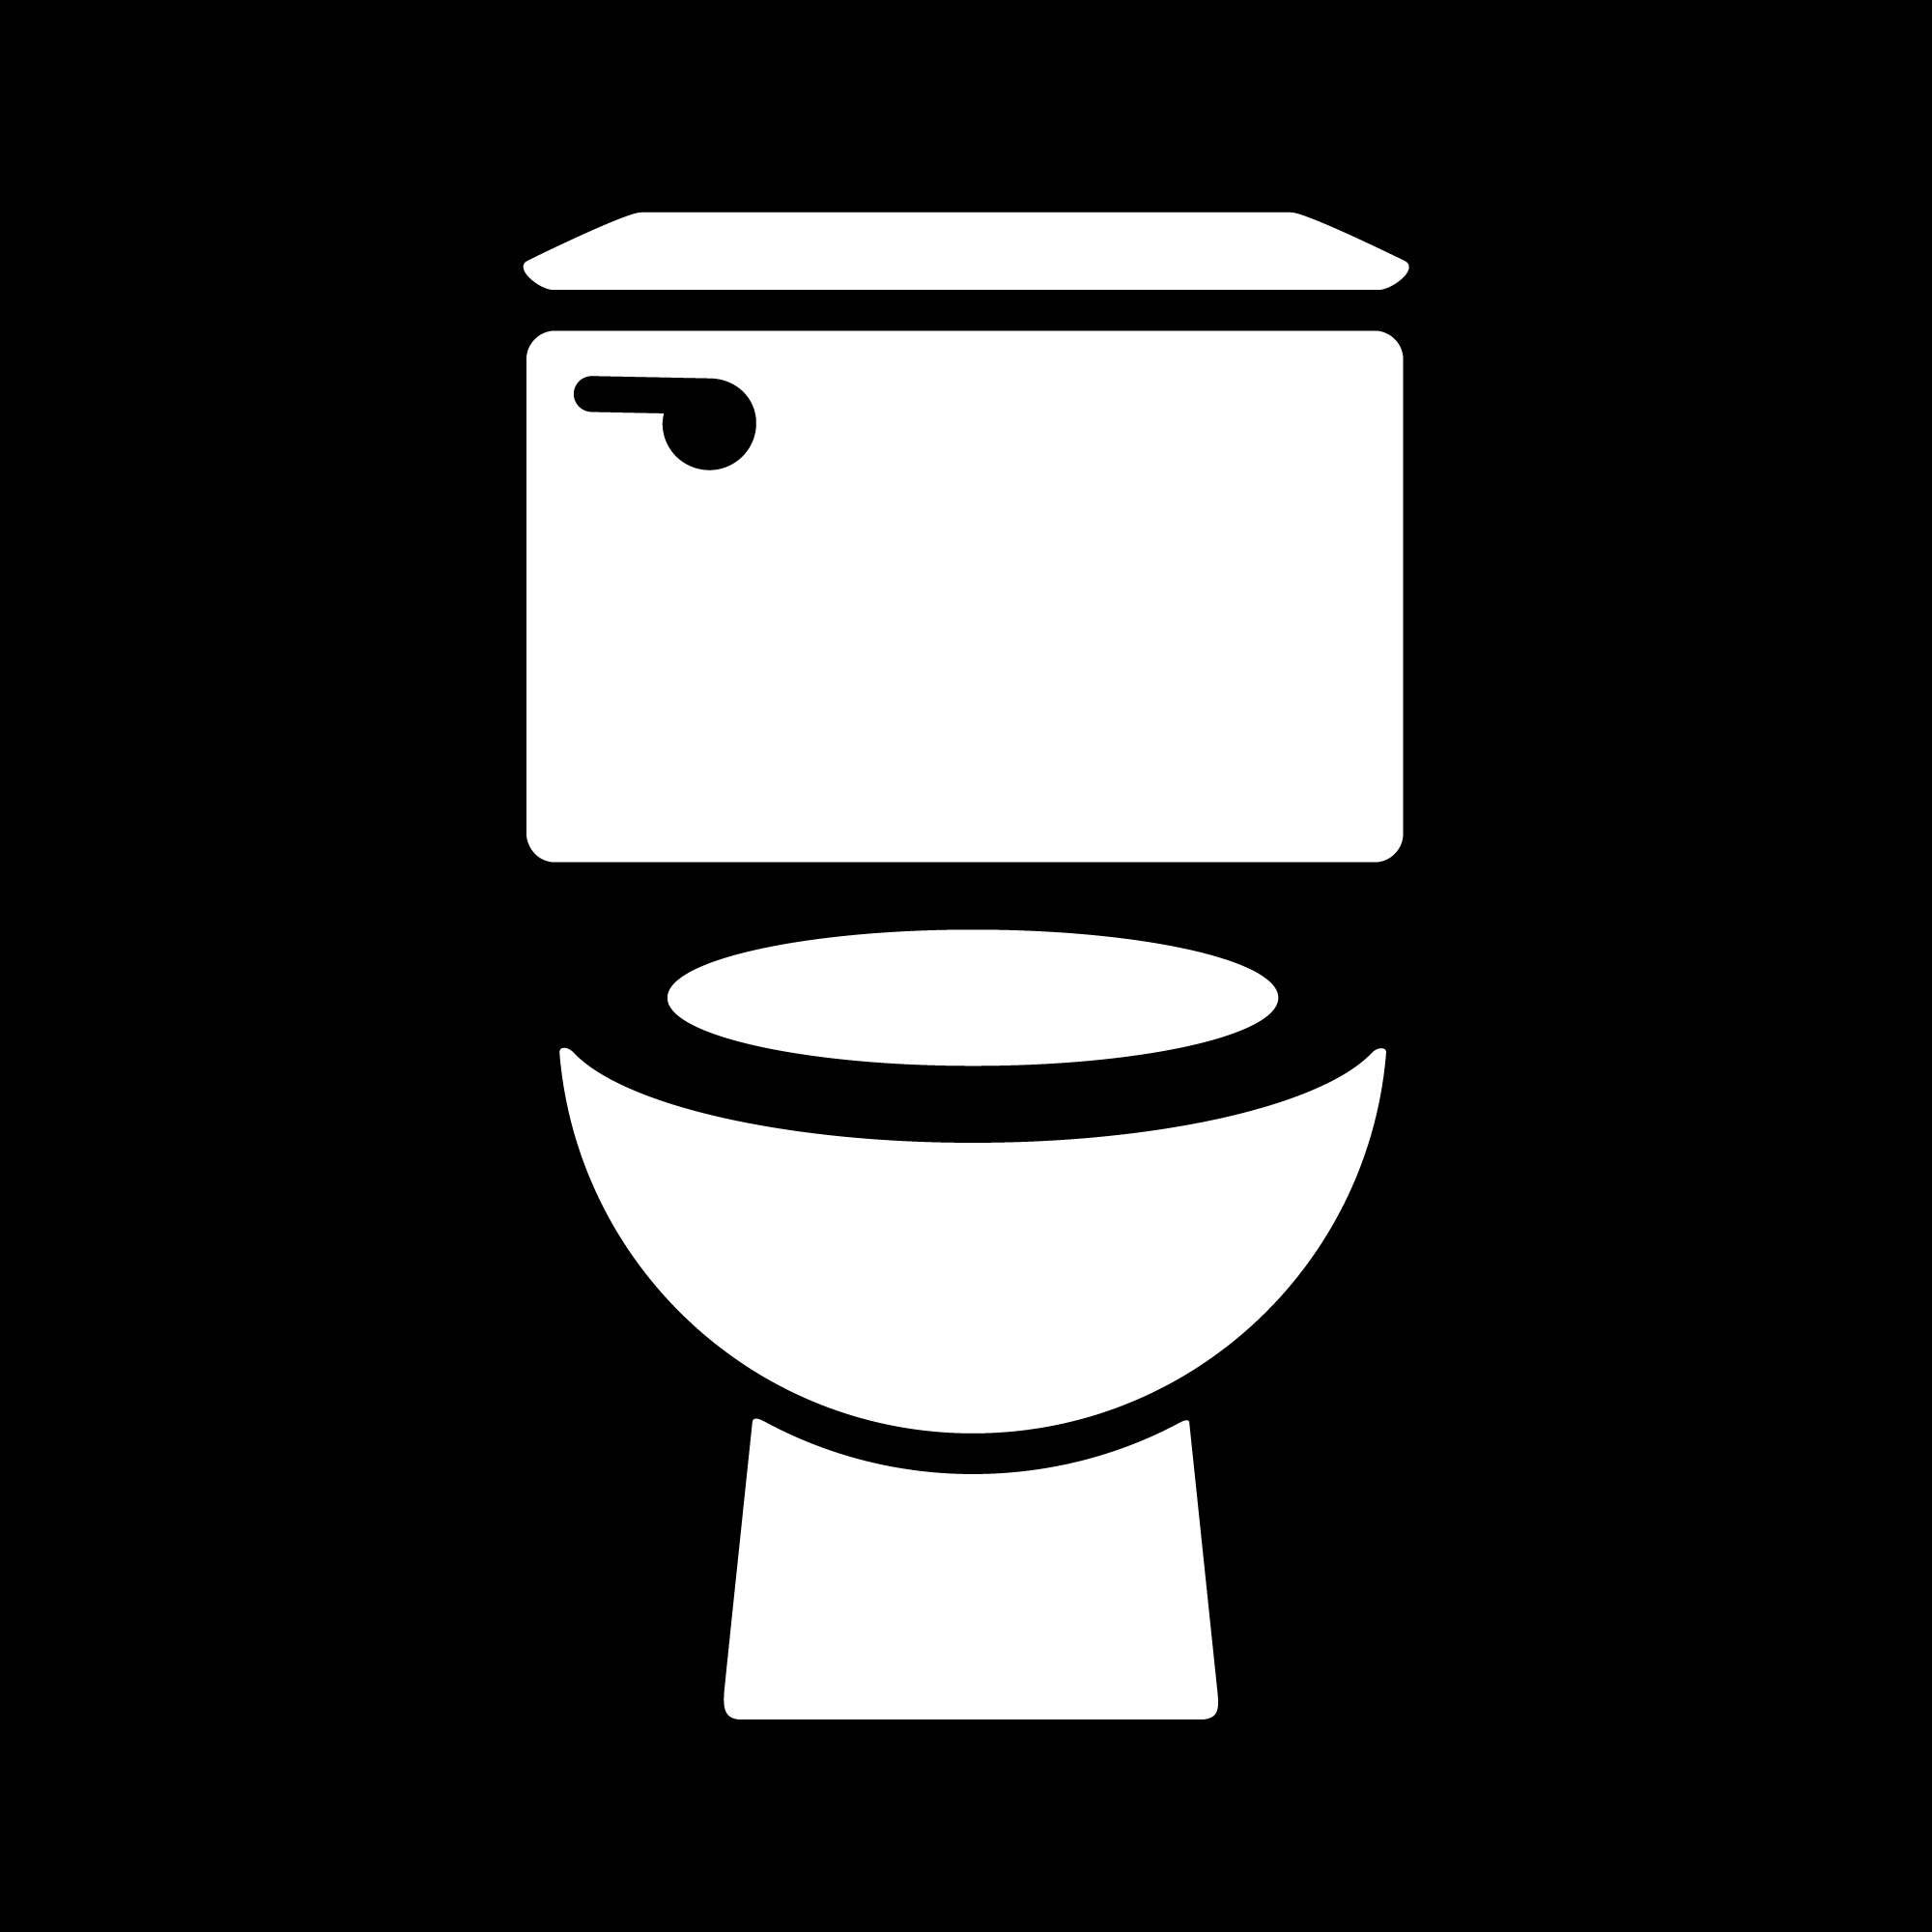 Унитаз значок. Пиктограмма унитаз. Логотип туалета. Табличка туалет унитаз.